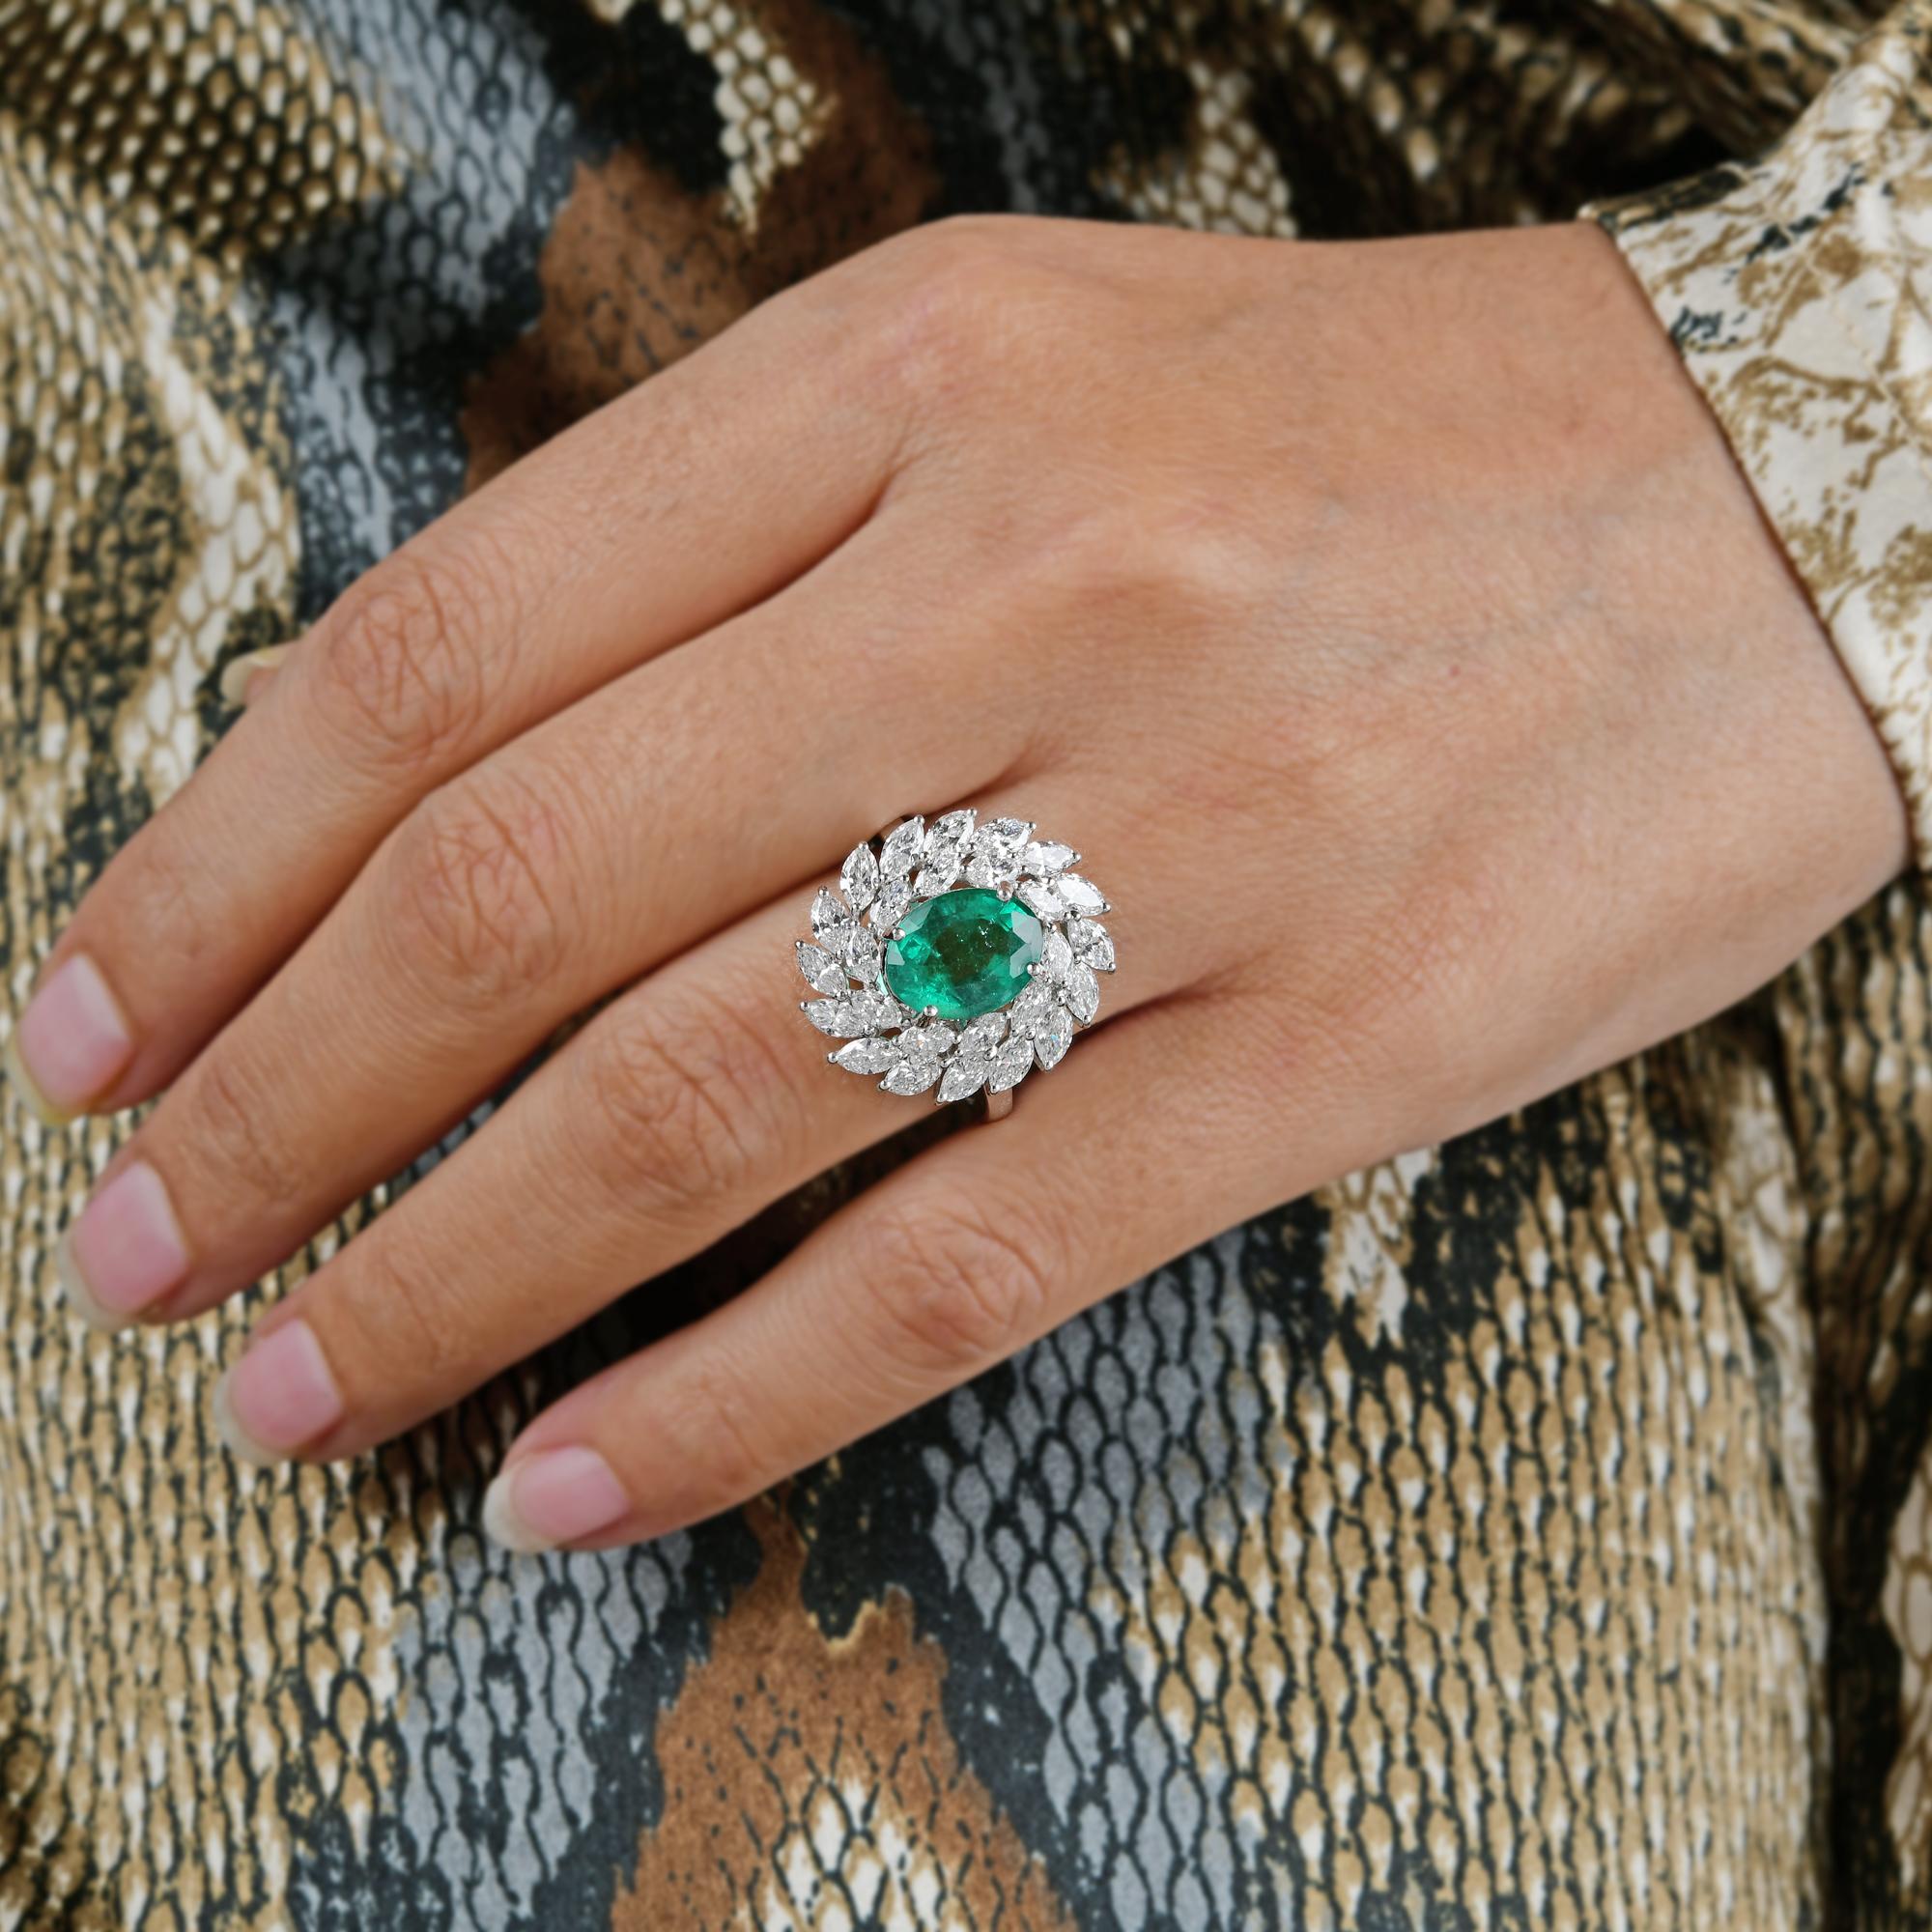 Oval Cut Oval Shape Emerald Gemstone Cocktail Ring Diamond 18 Karat White Gold Jewelry For Sale